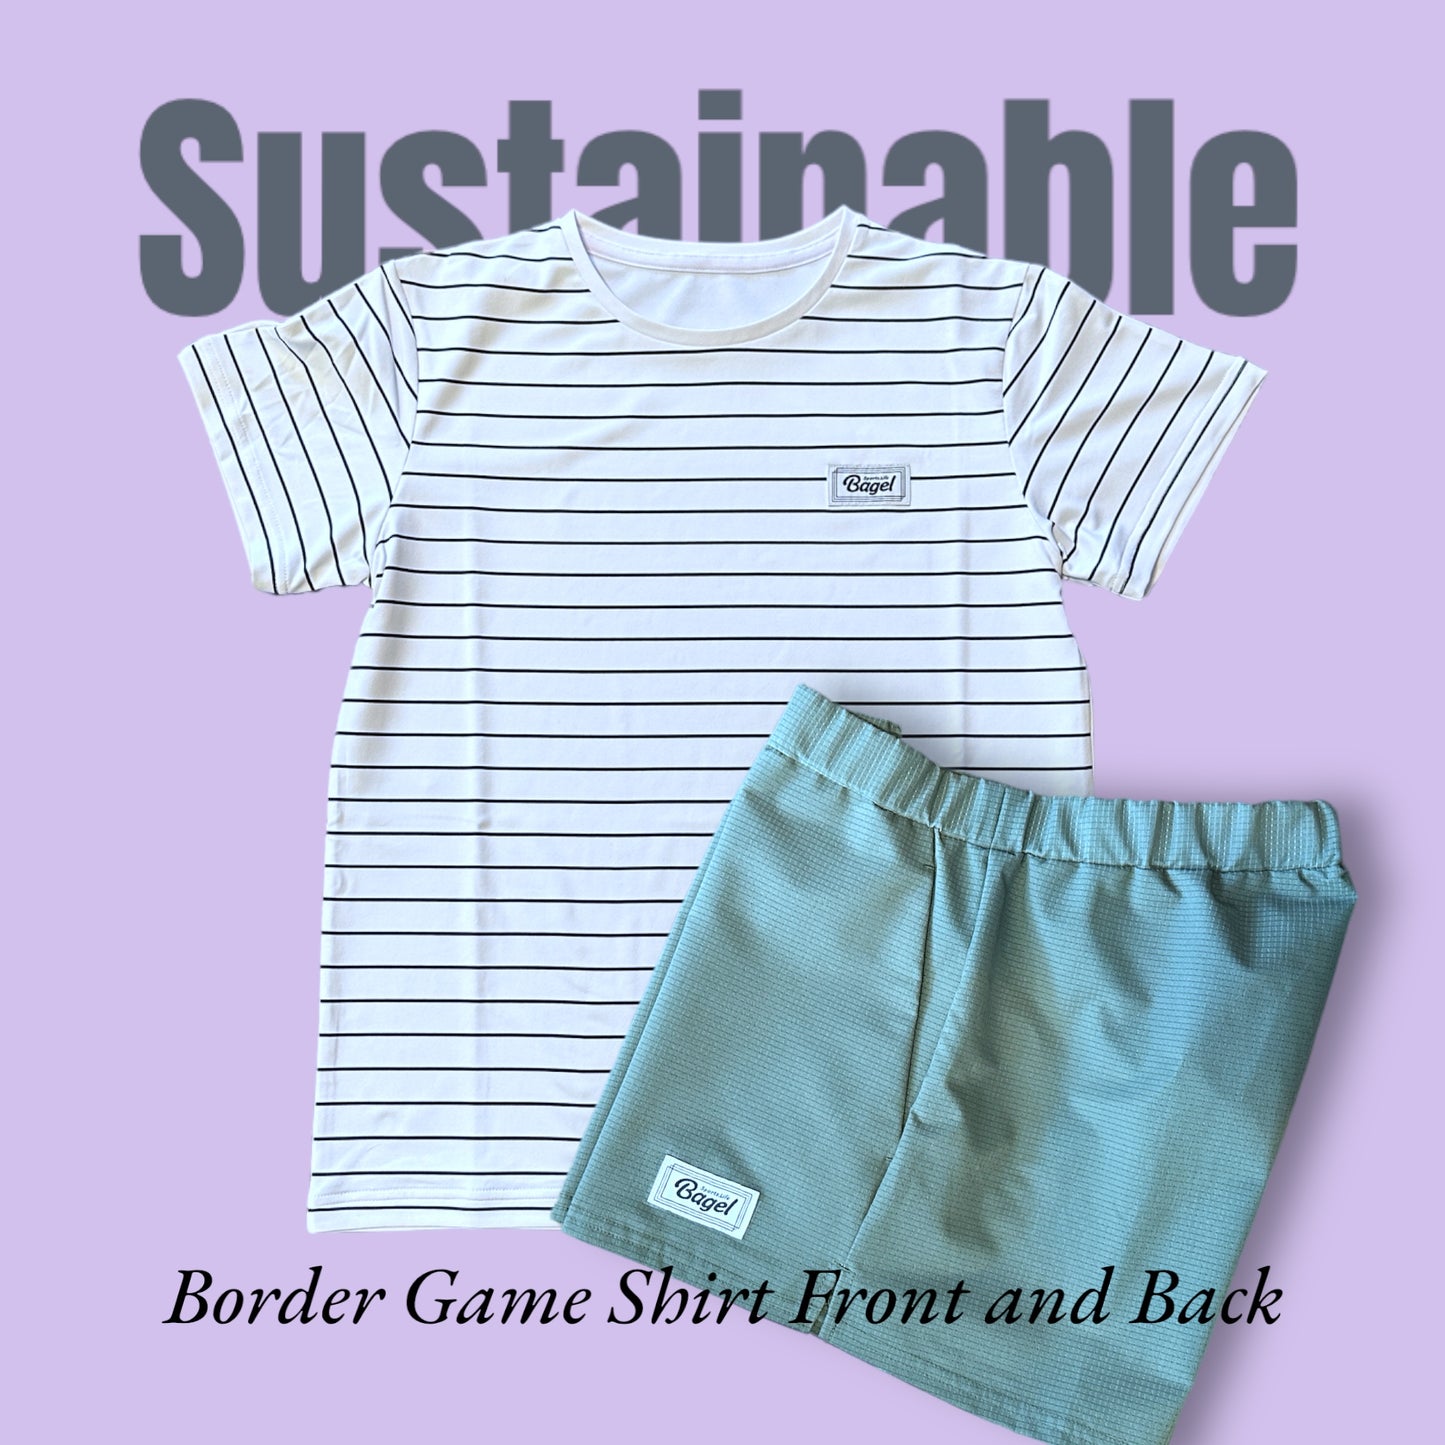 LADIES Sustainable BorderFB Game Shirt White